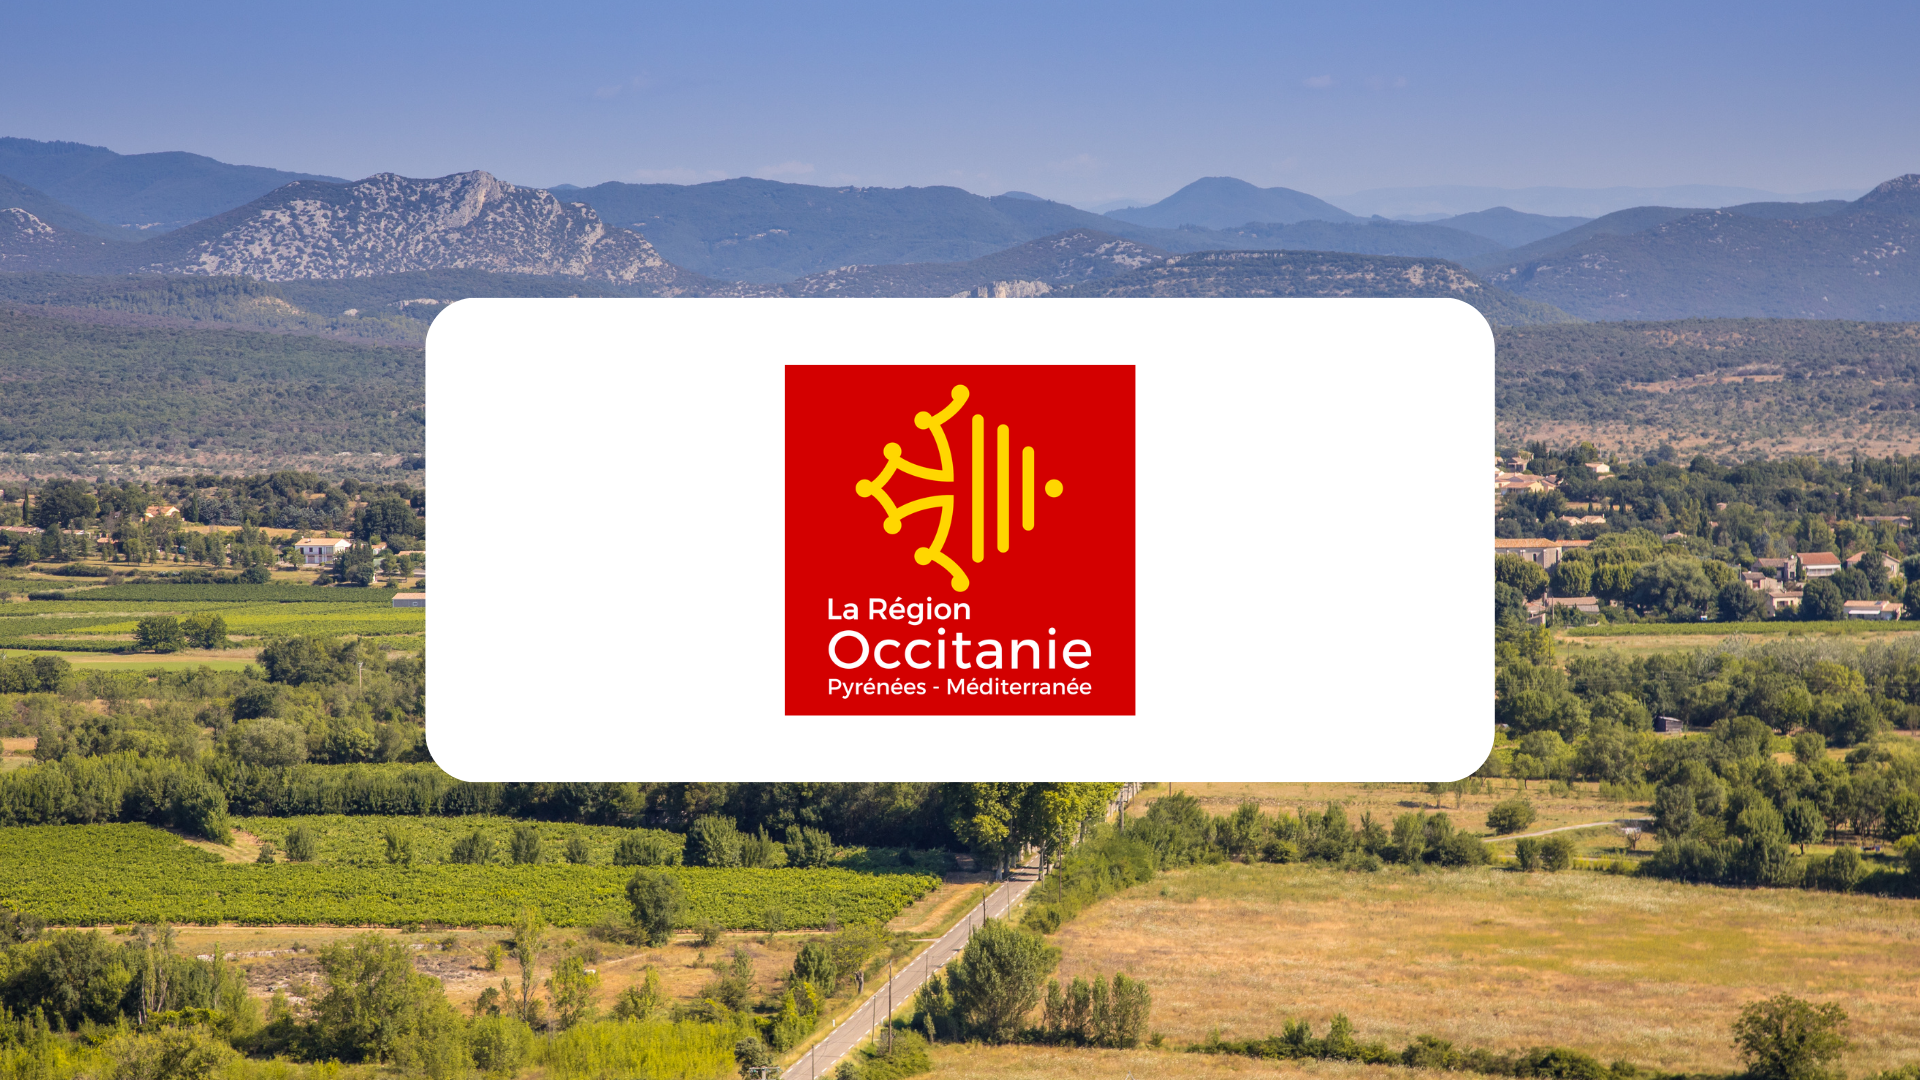 Highlighting the Occitanie Region's Oxygen Map